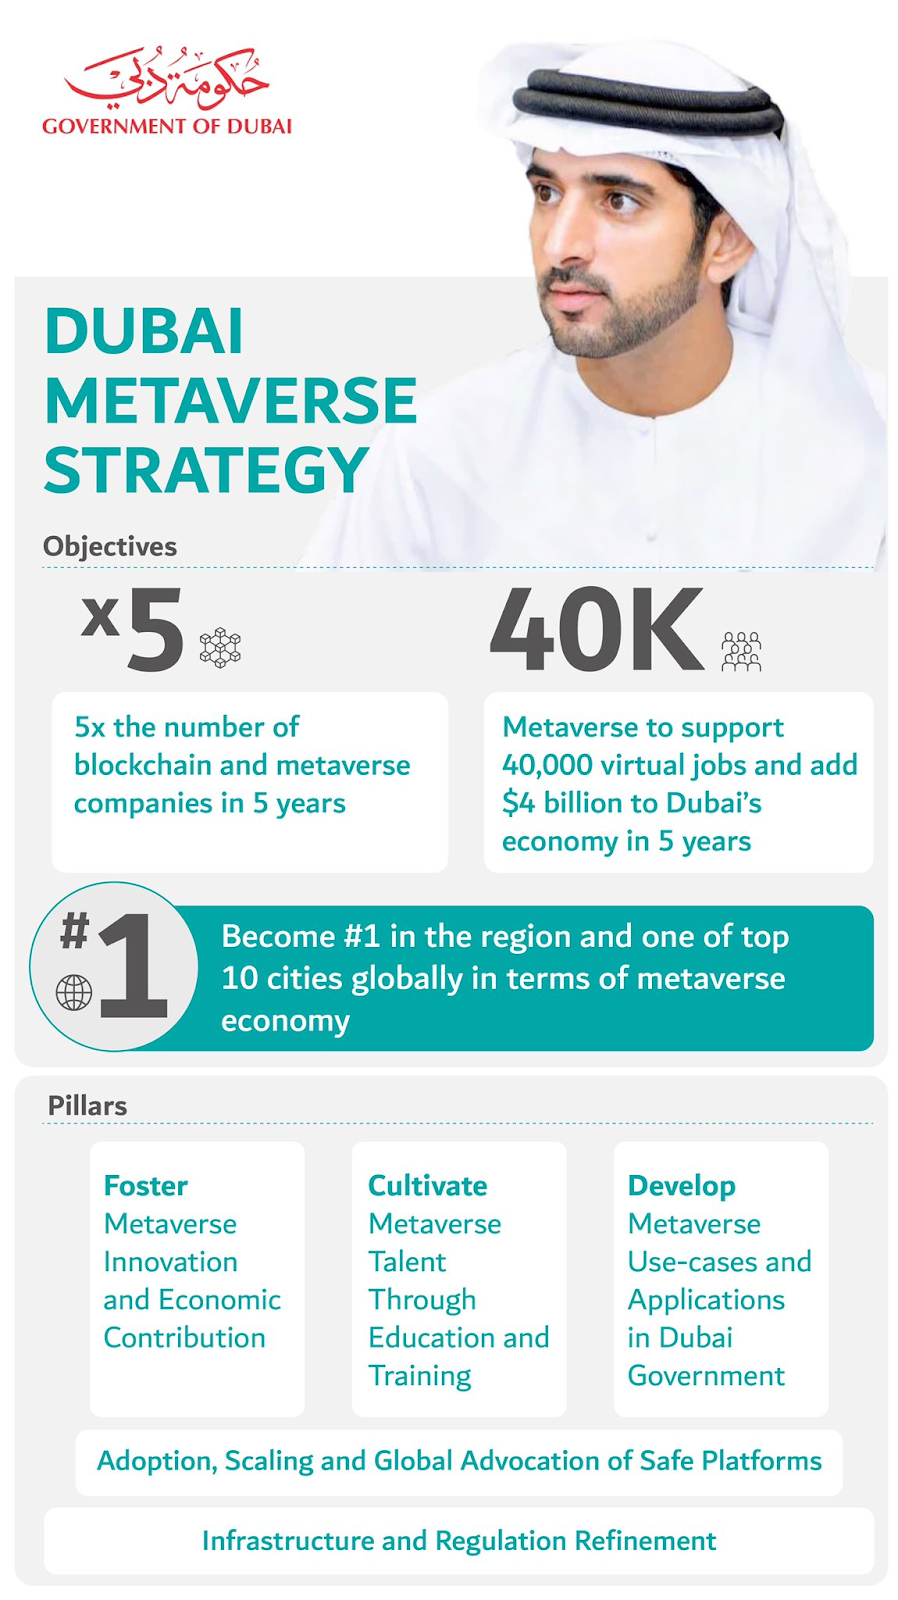 The Dubai Metaverse Strategy